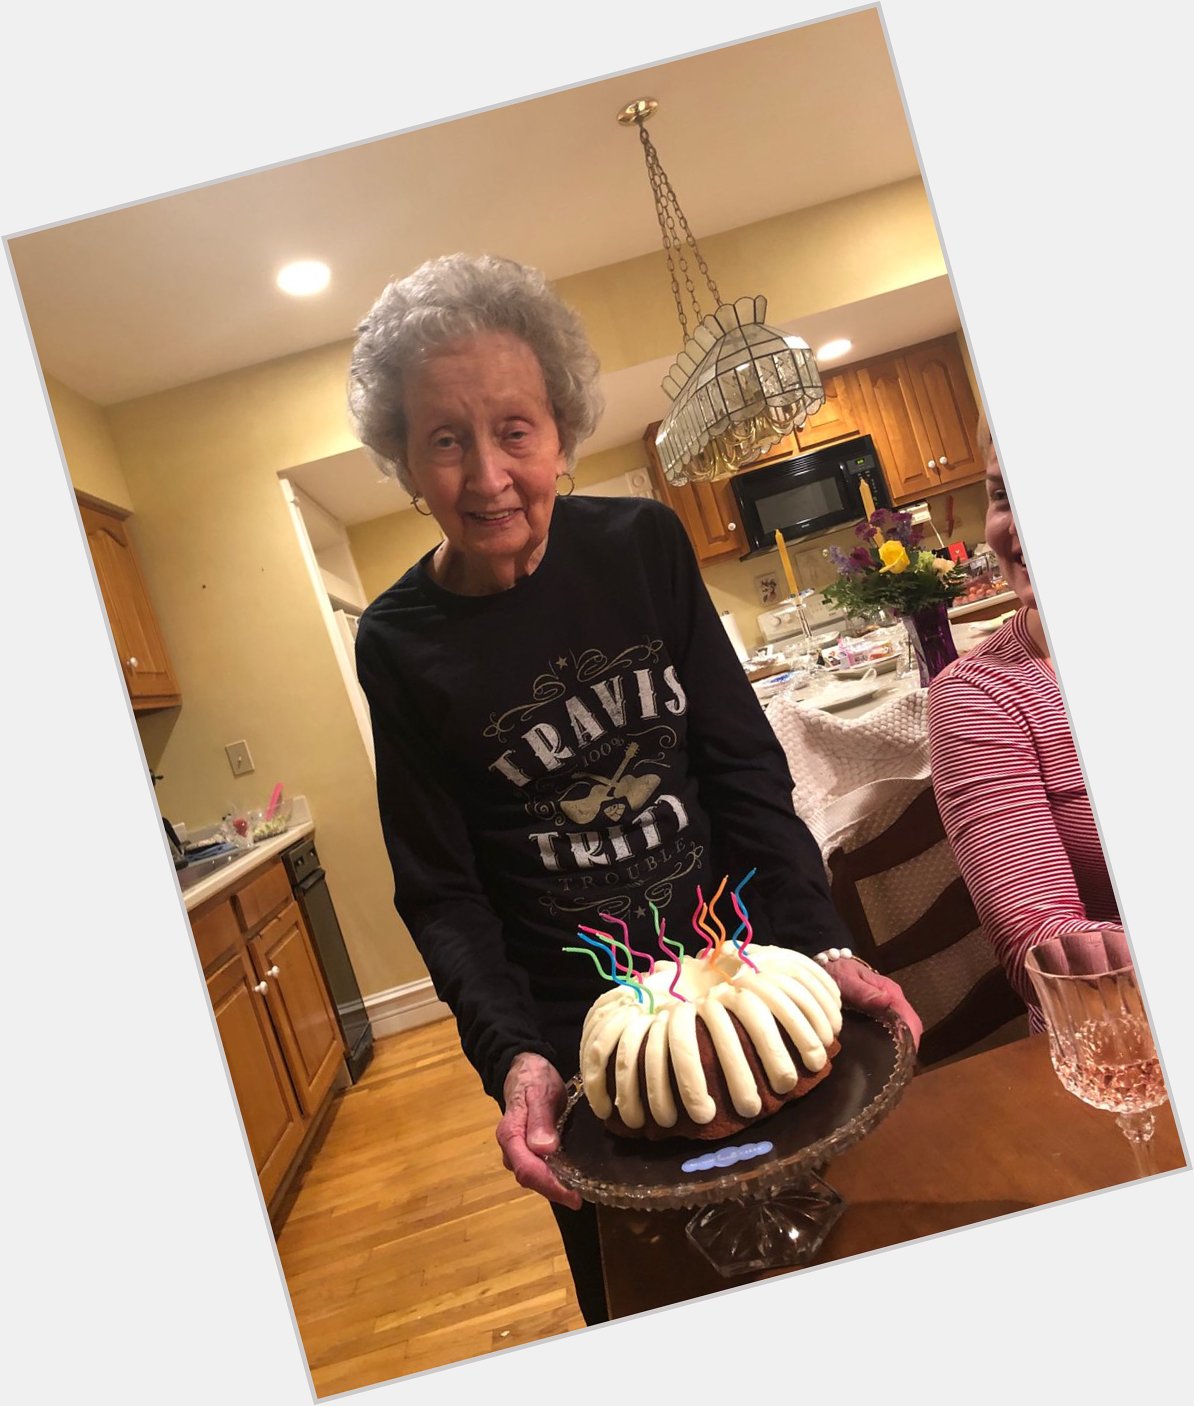 Happy Birthday Mom! Sporting her new Travis Tritt shirt, she makes 89 look good! 